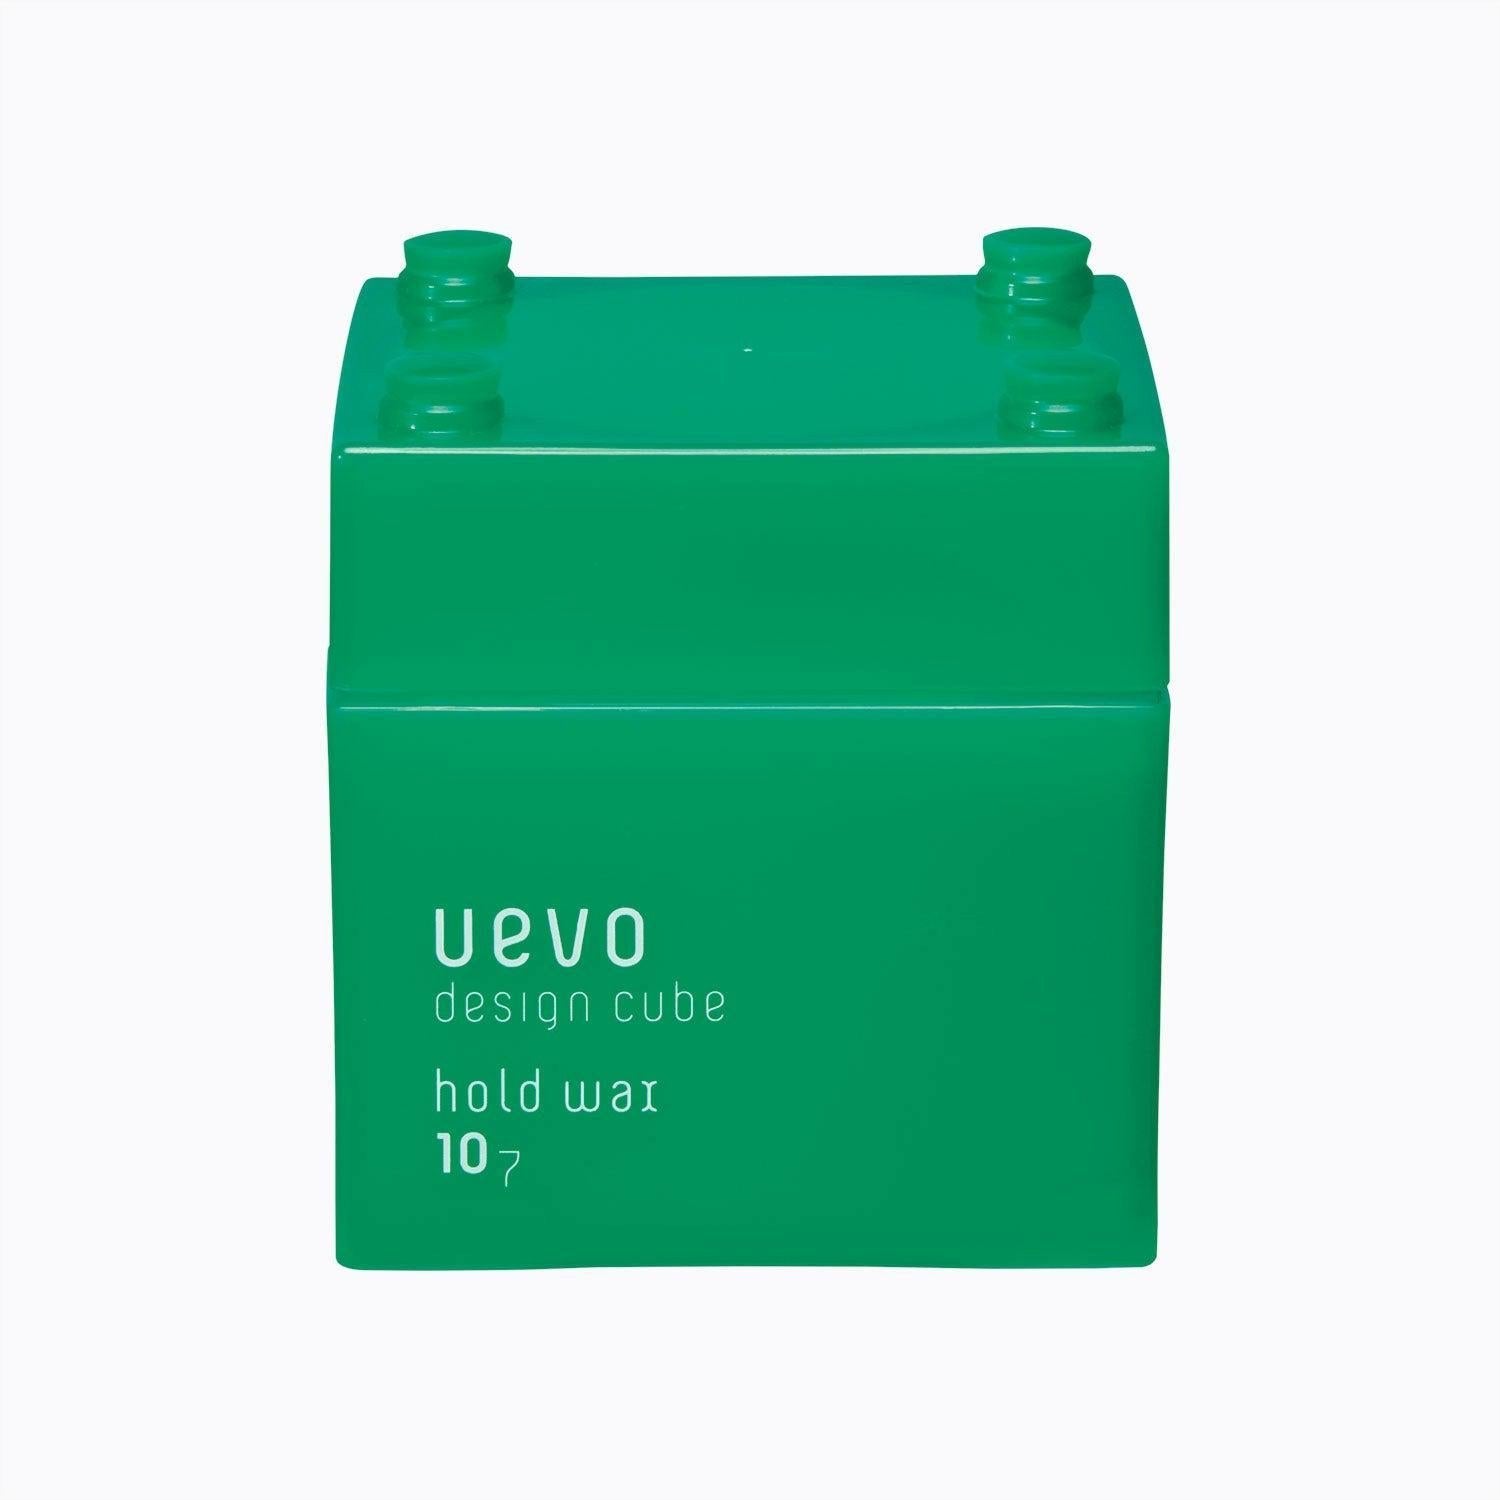 P-1-UEVO-HARWAX-HO80-Uevo Design Cube Hold Hair Wax 80g.jpg